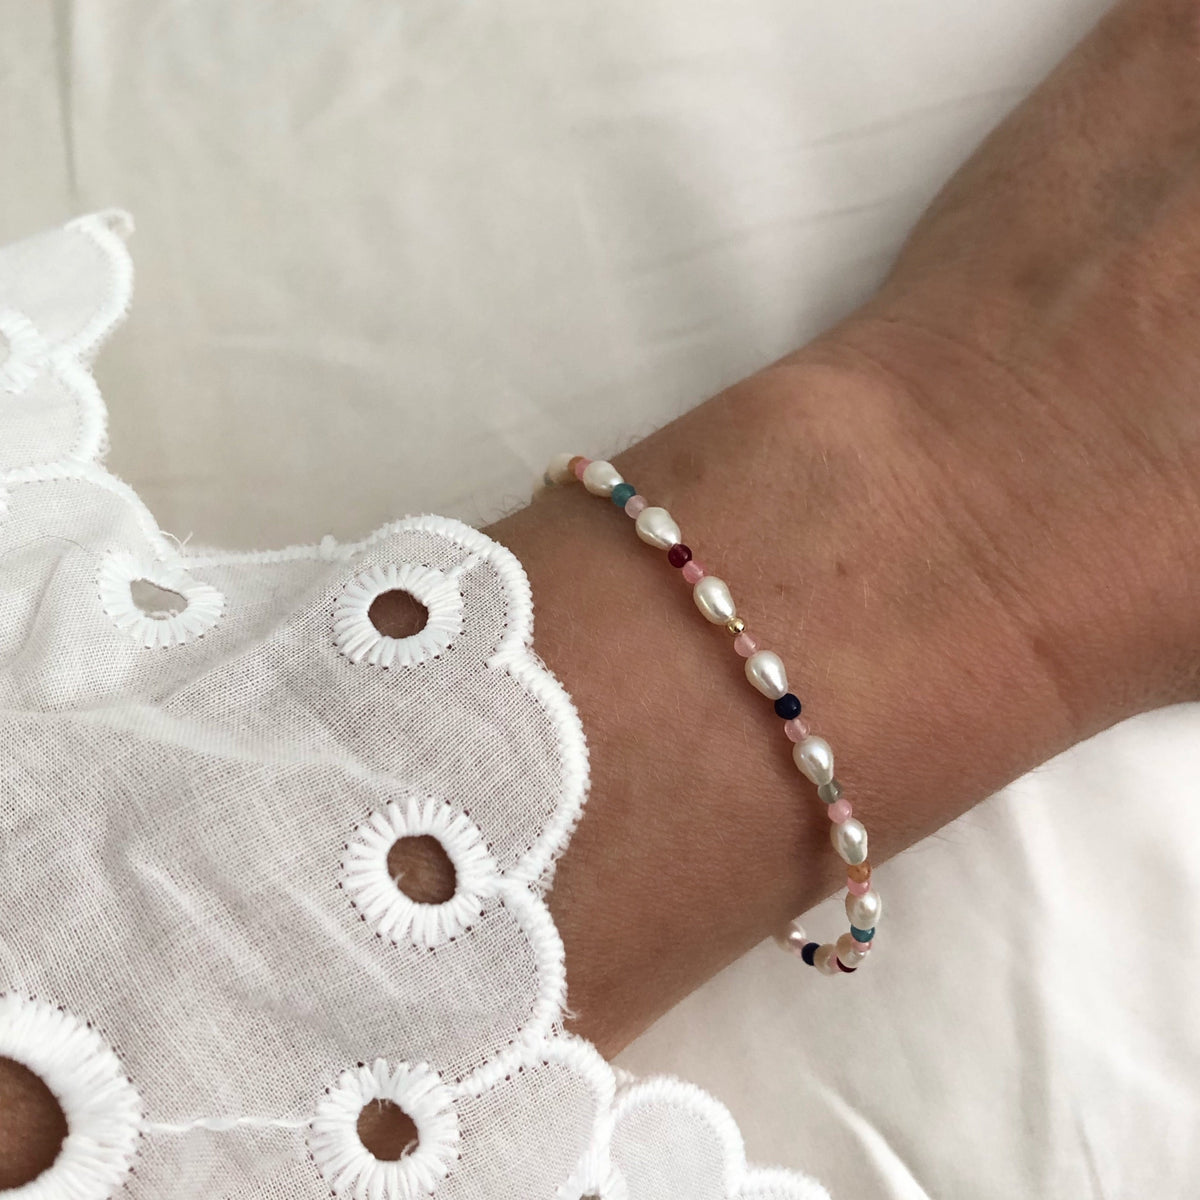 Boho Girly Bracelet - White Freshwater Pearl Bracelet with Gems